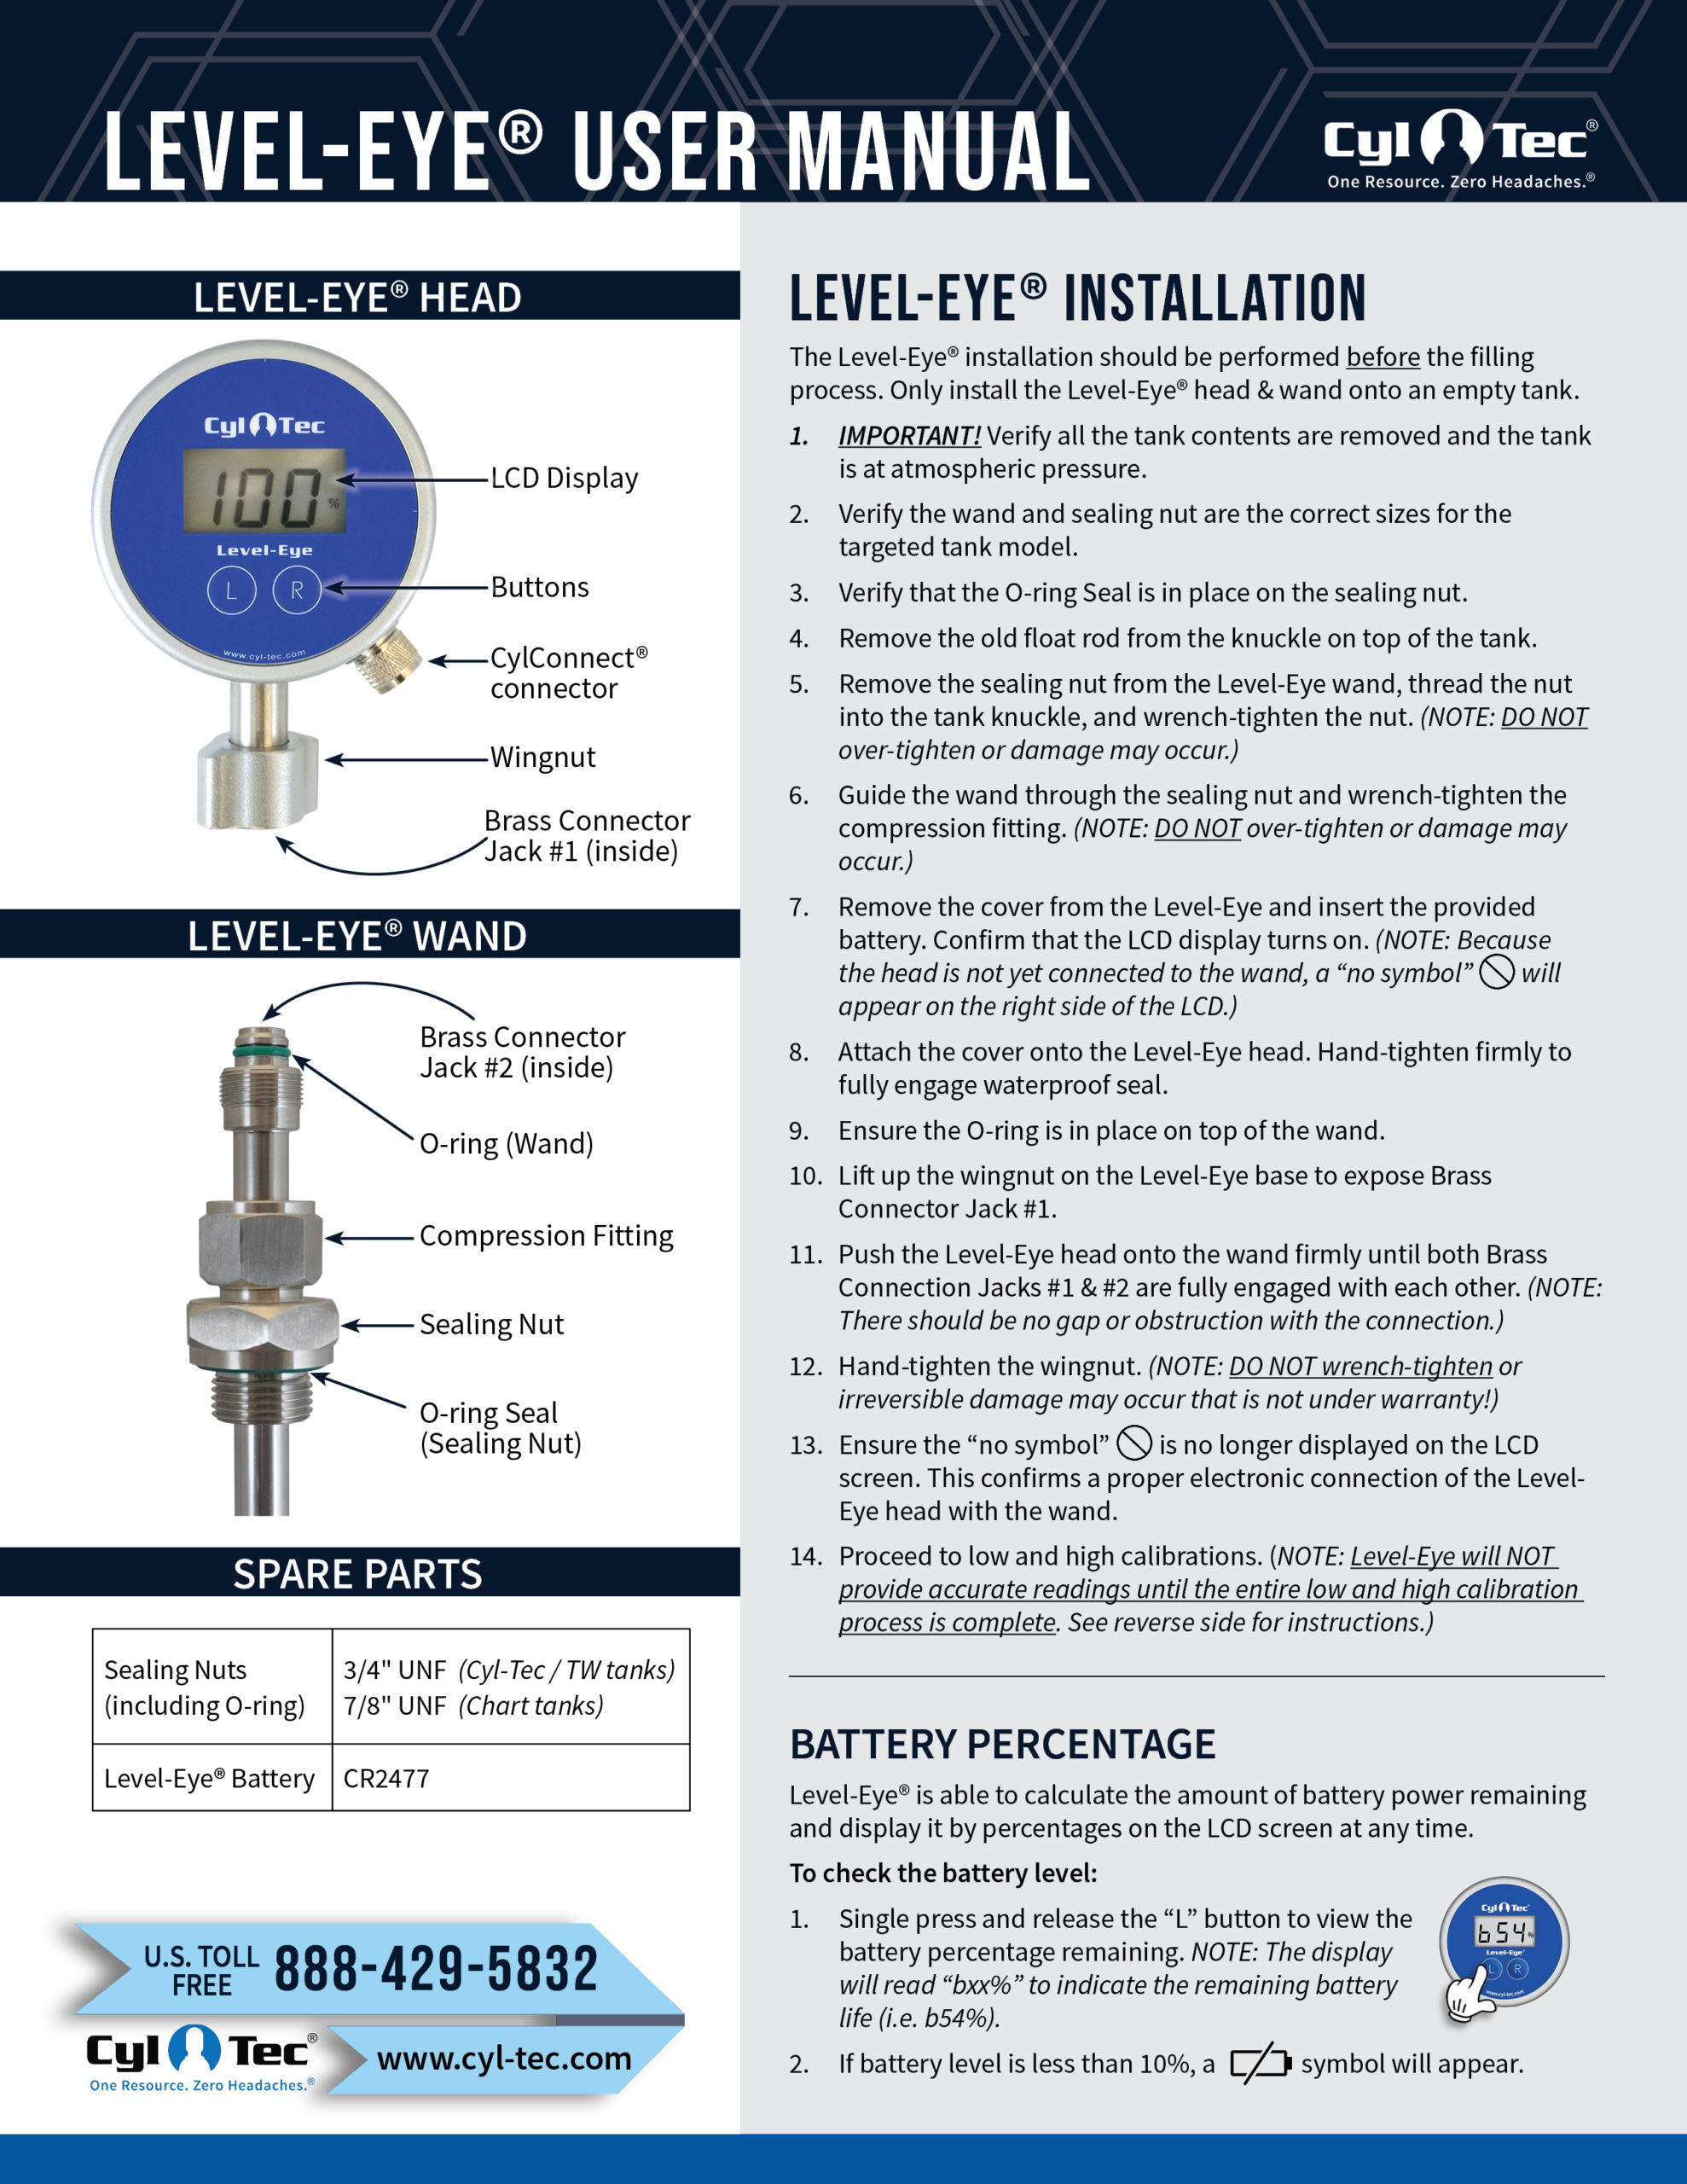 Level-Eye User Manual - Installation and Calibration